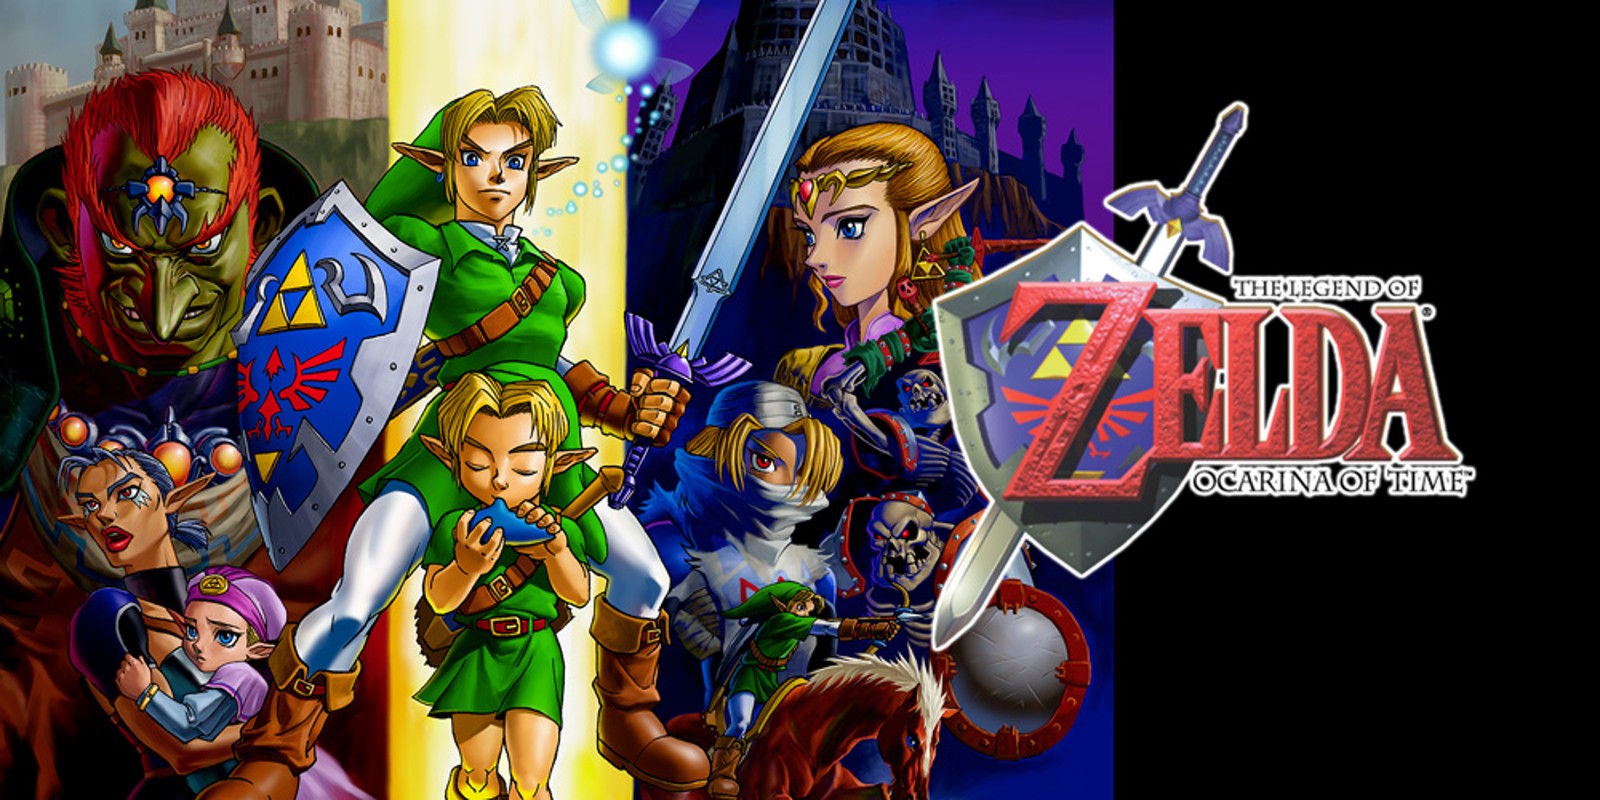 Gods børn Rund The Legend of Zelda: Ocarina of Time | Nintendo 64 | Games | Nintendo